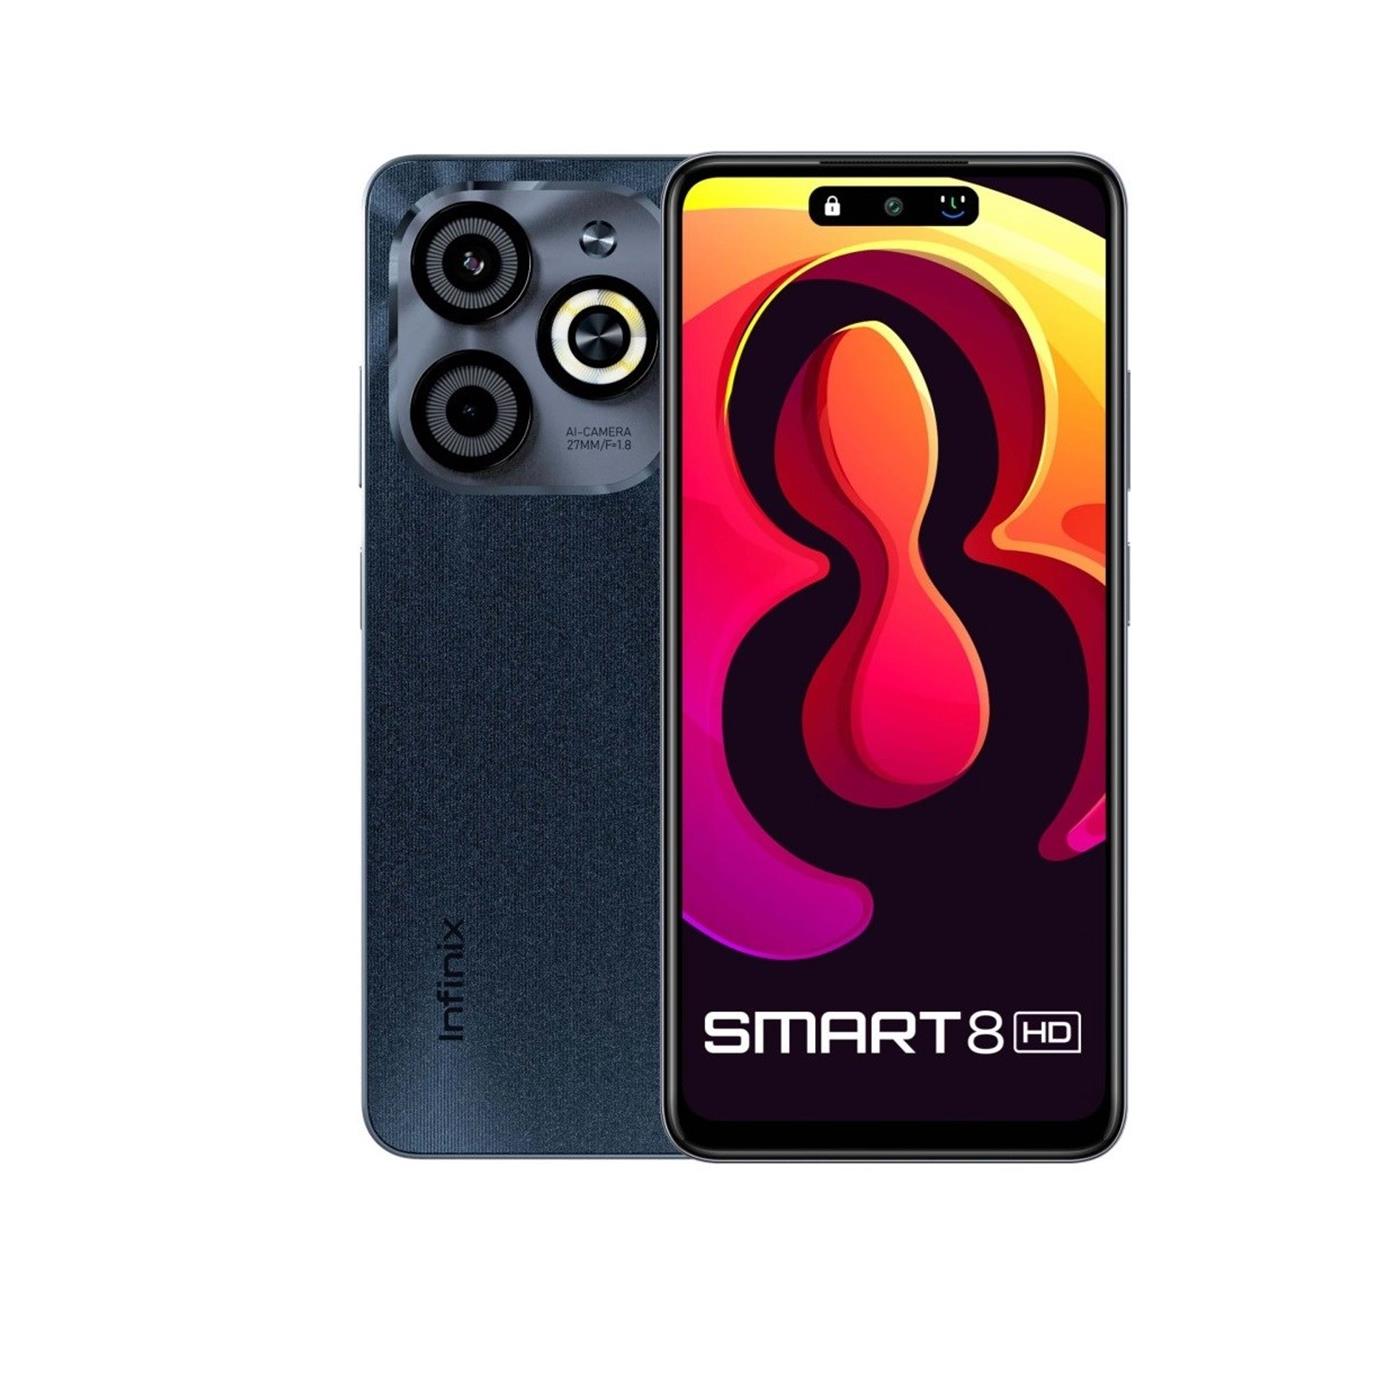 Infinix Smart 8 HD Factory Reset